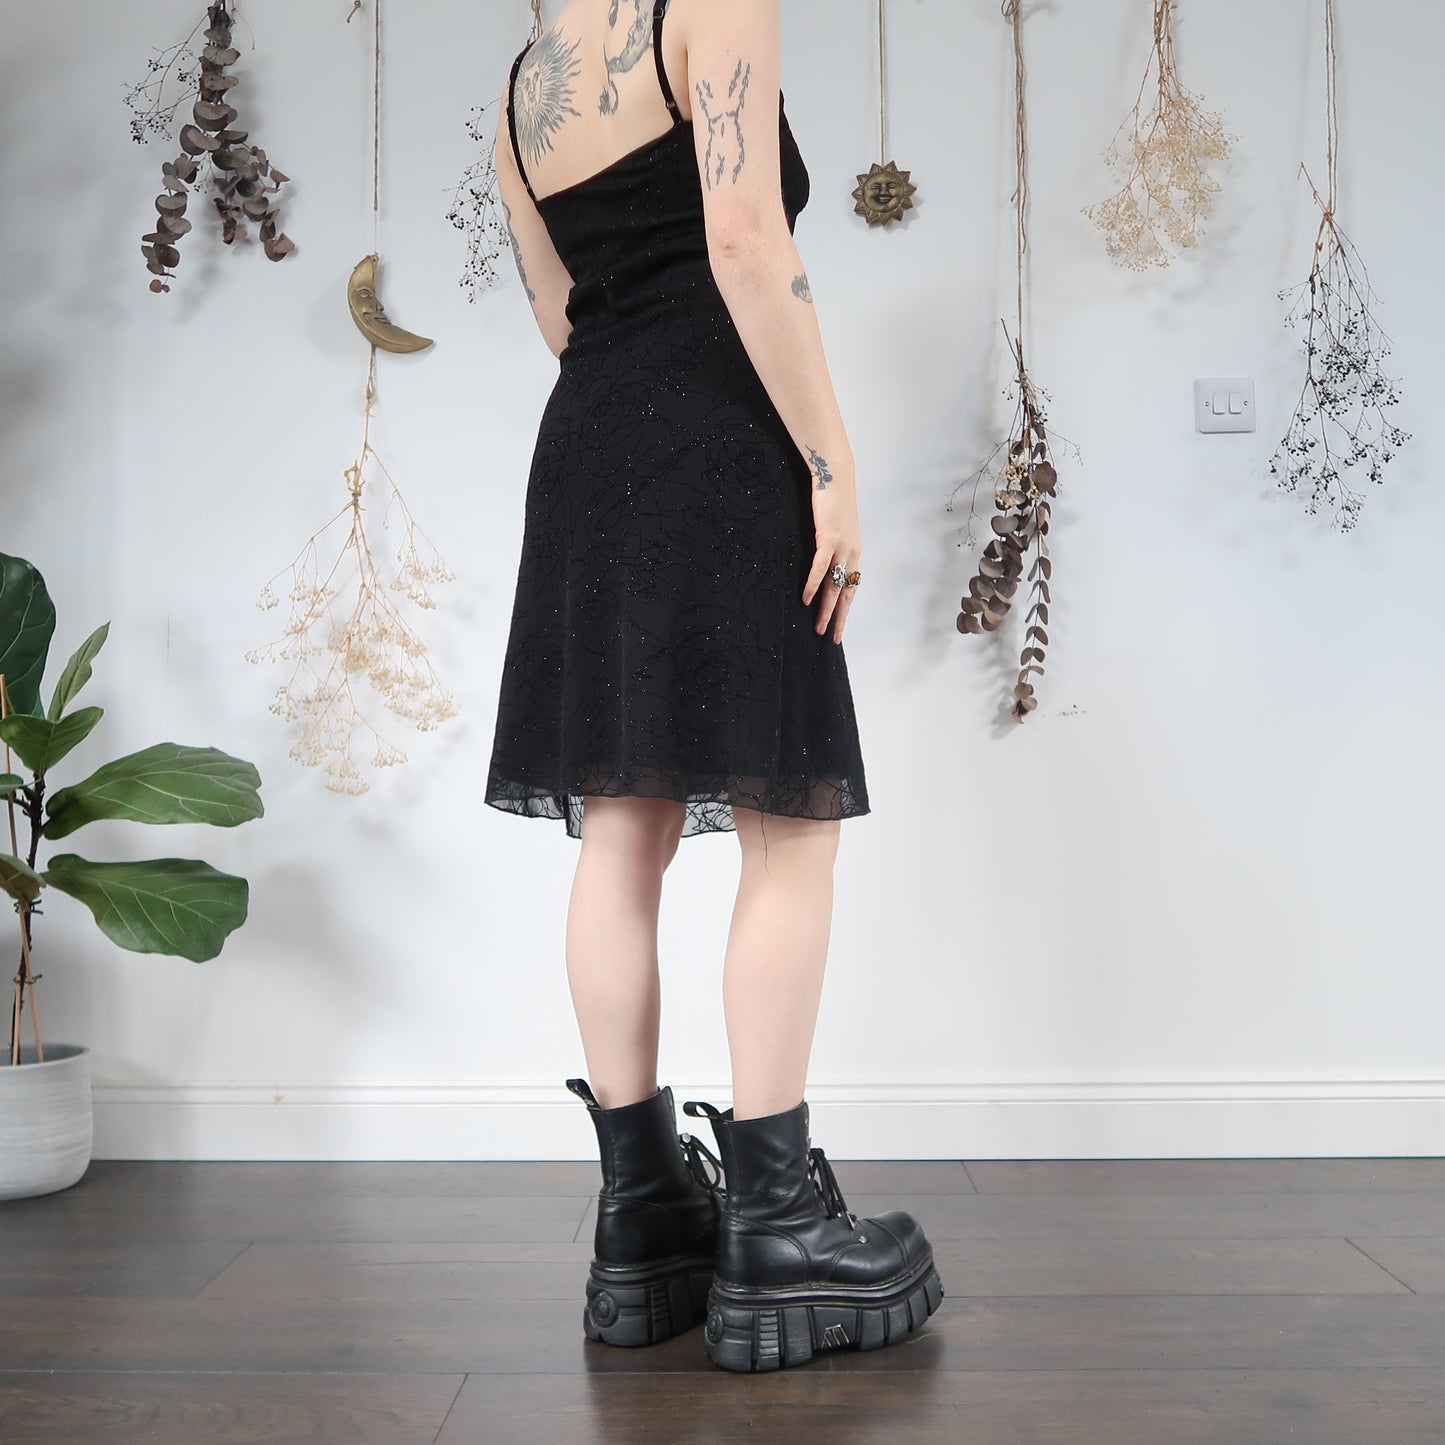 Black mesh dress - size S/M